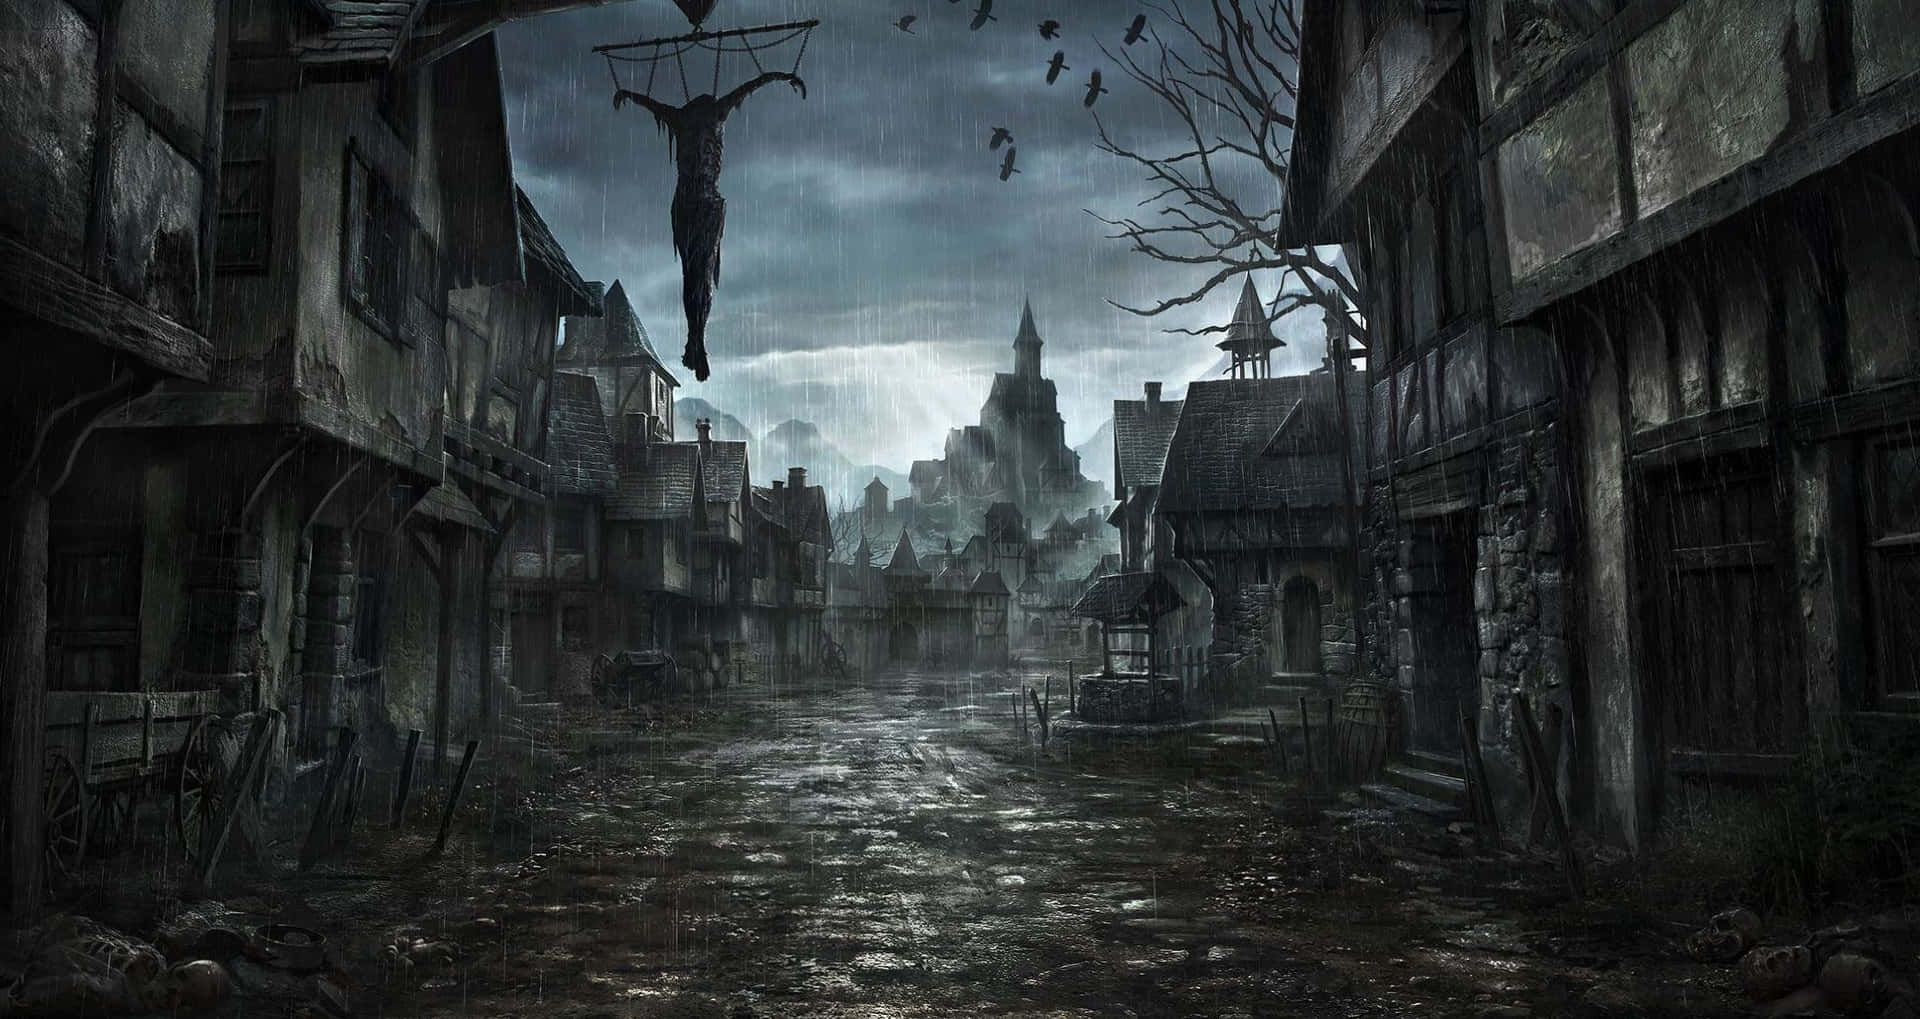 "An eerie graveyard lurks in the darkness on Halloween night".